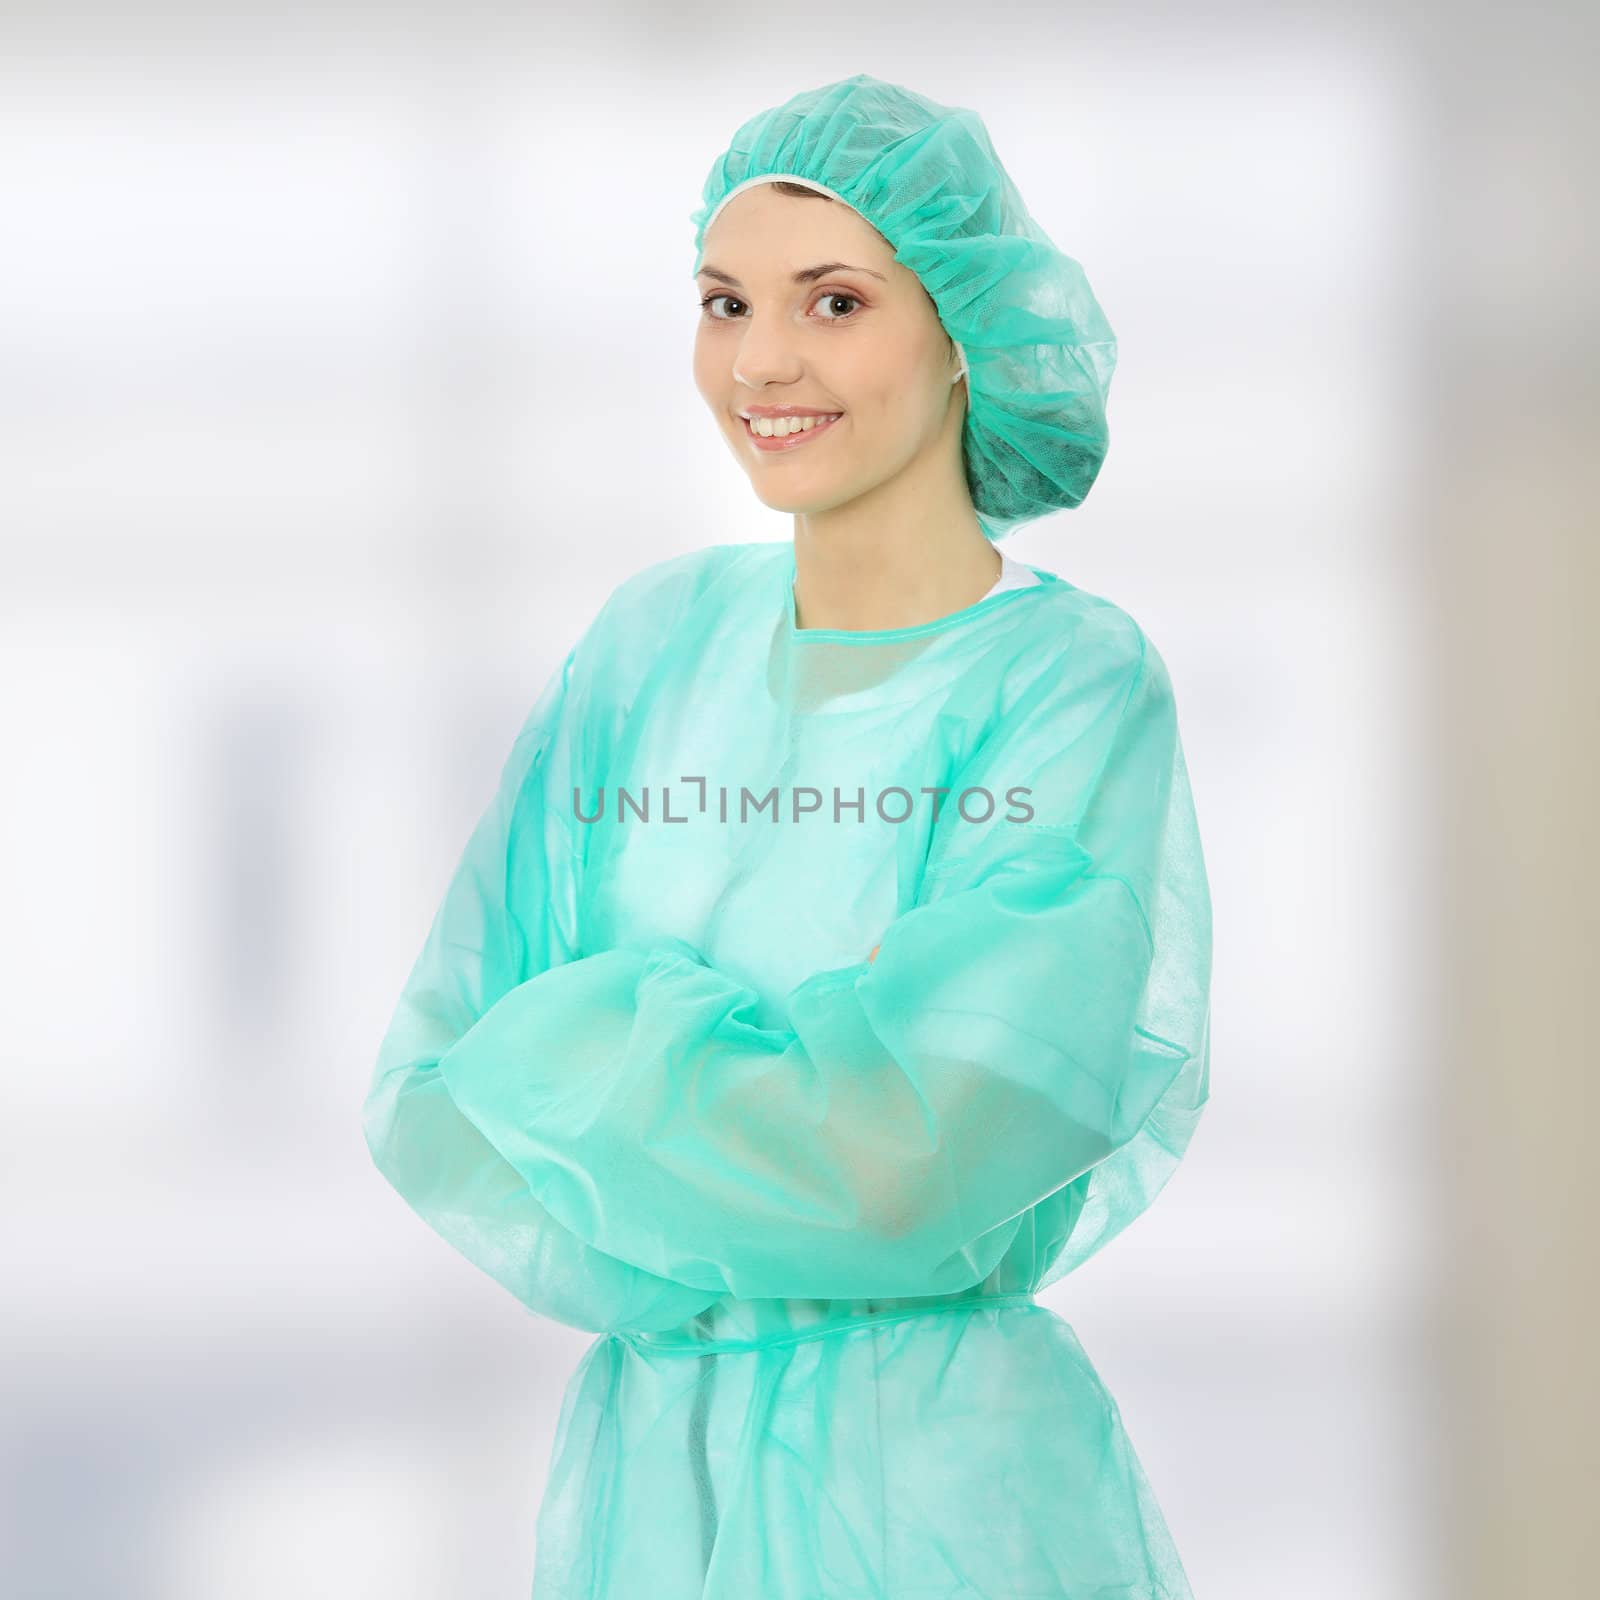 Portrait of female surgeon or nurse wearing protective uniform